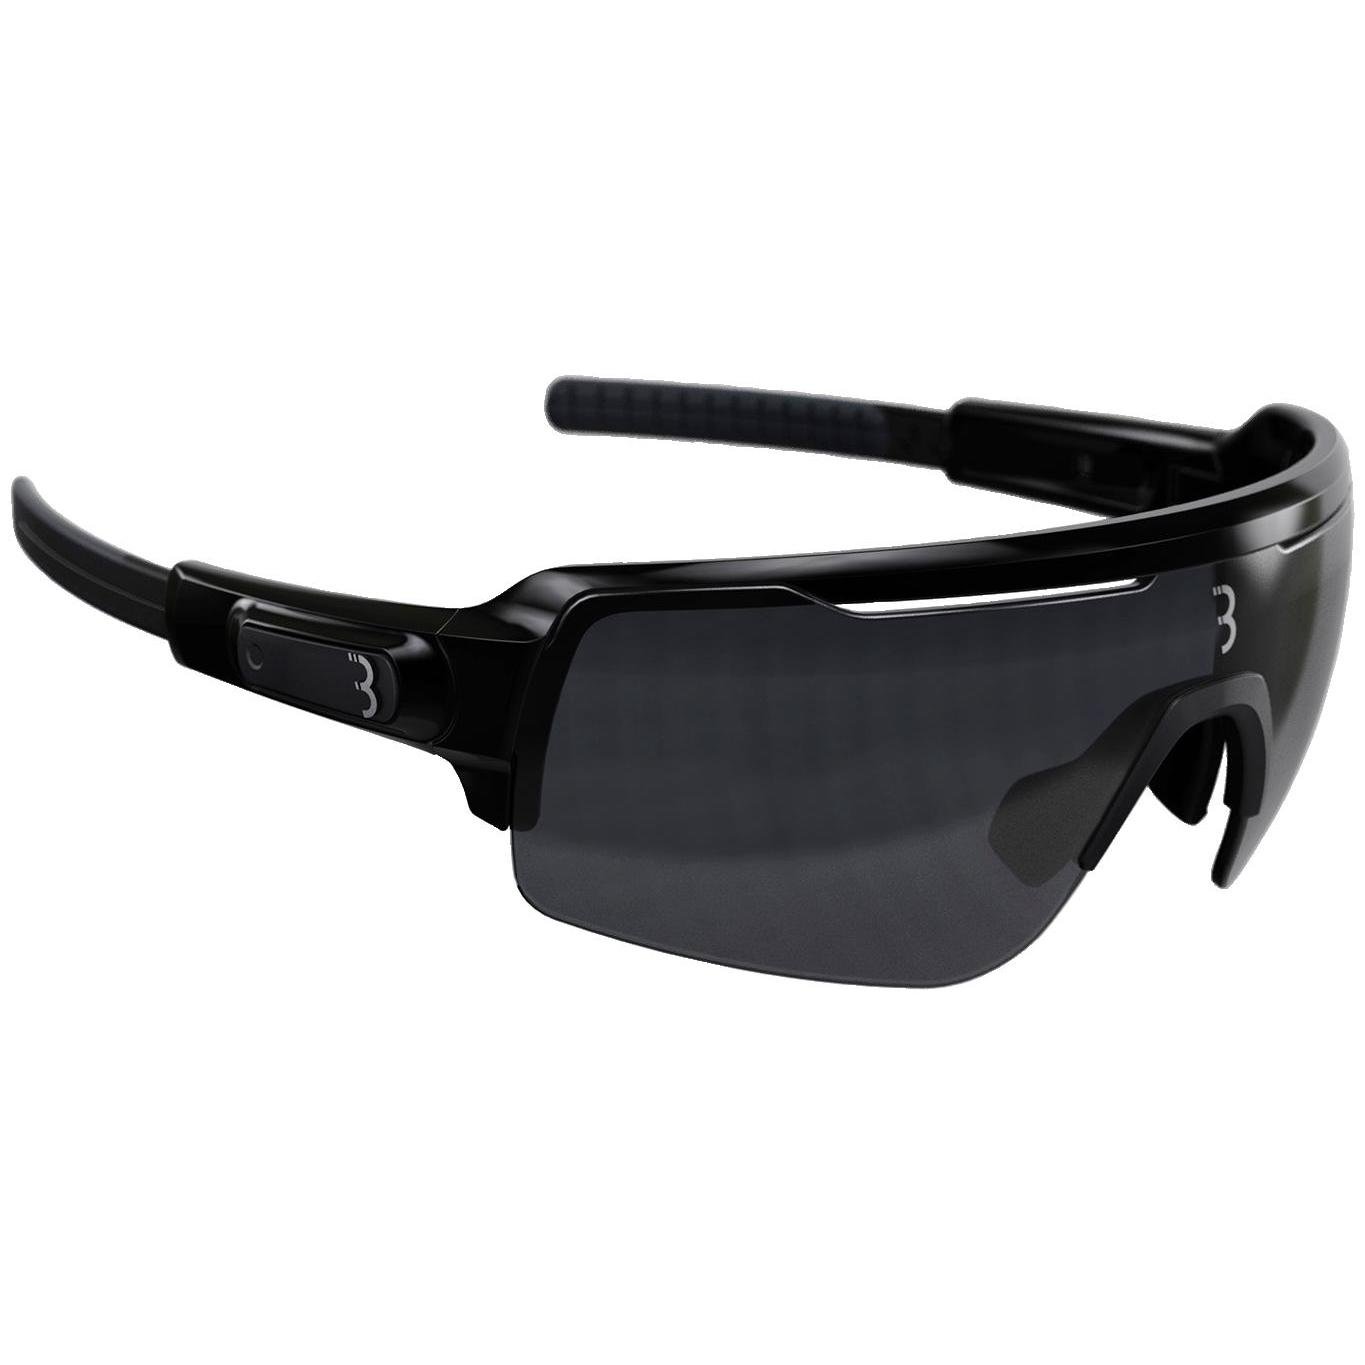 Очки велосипедные BBB 2019 sunglasses Commander PC Smoke MLC silver lens PC clear, glossy black, BSG-61